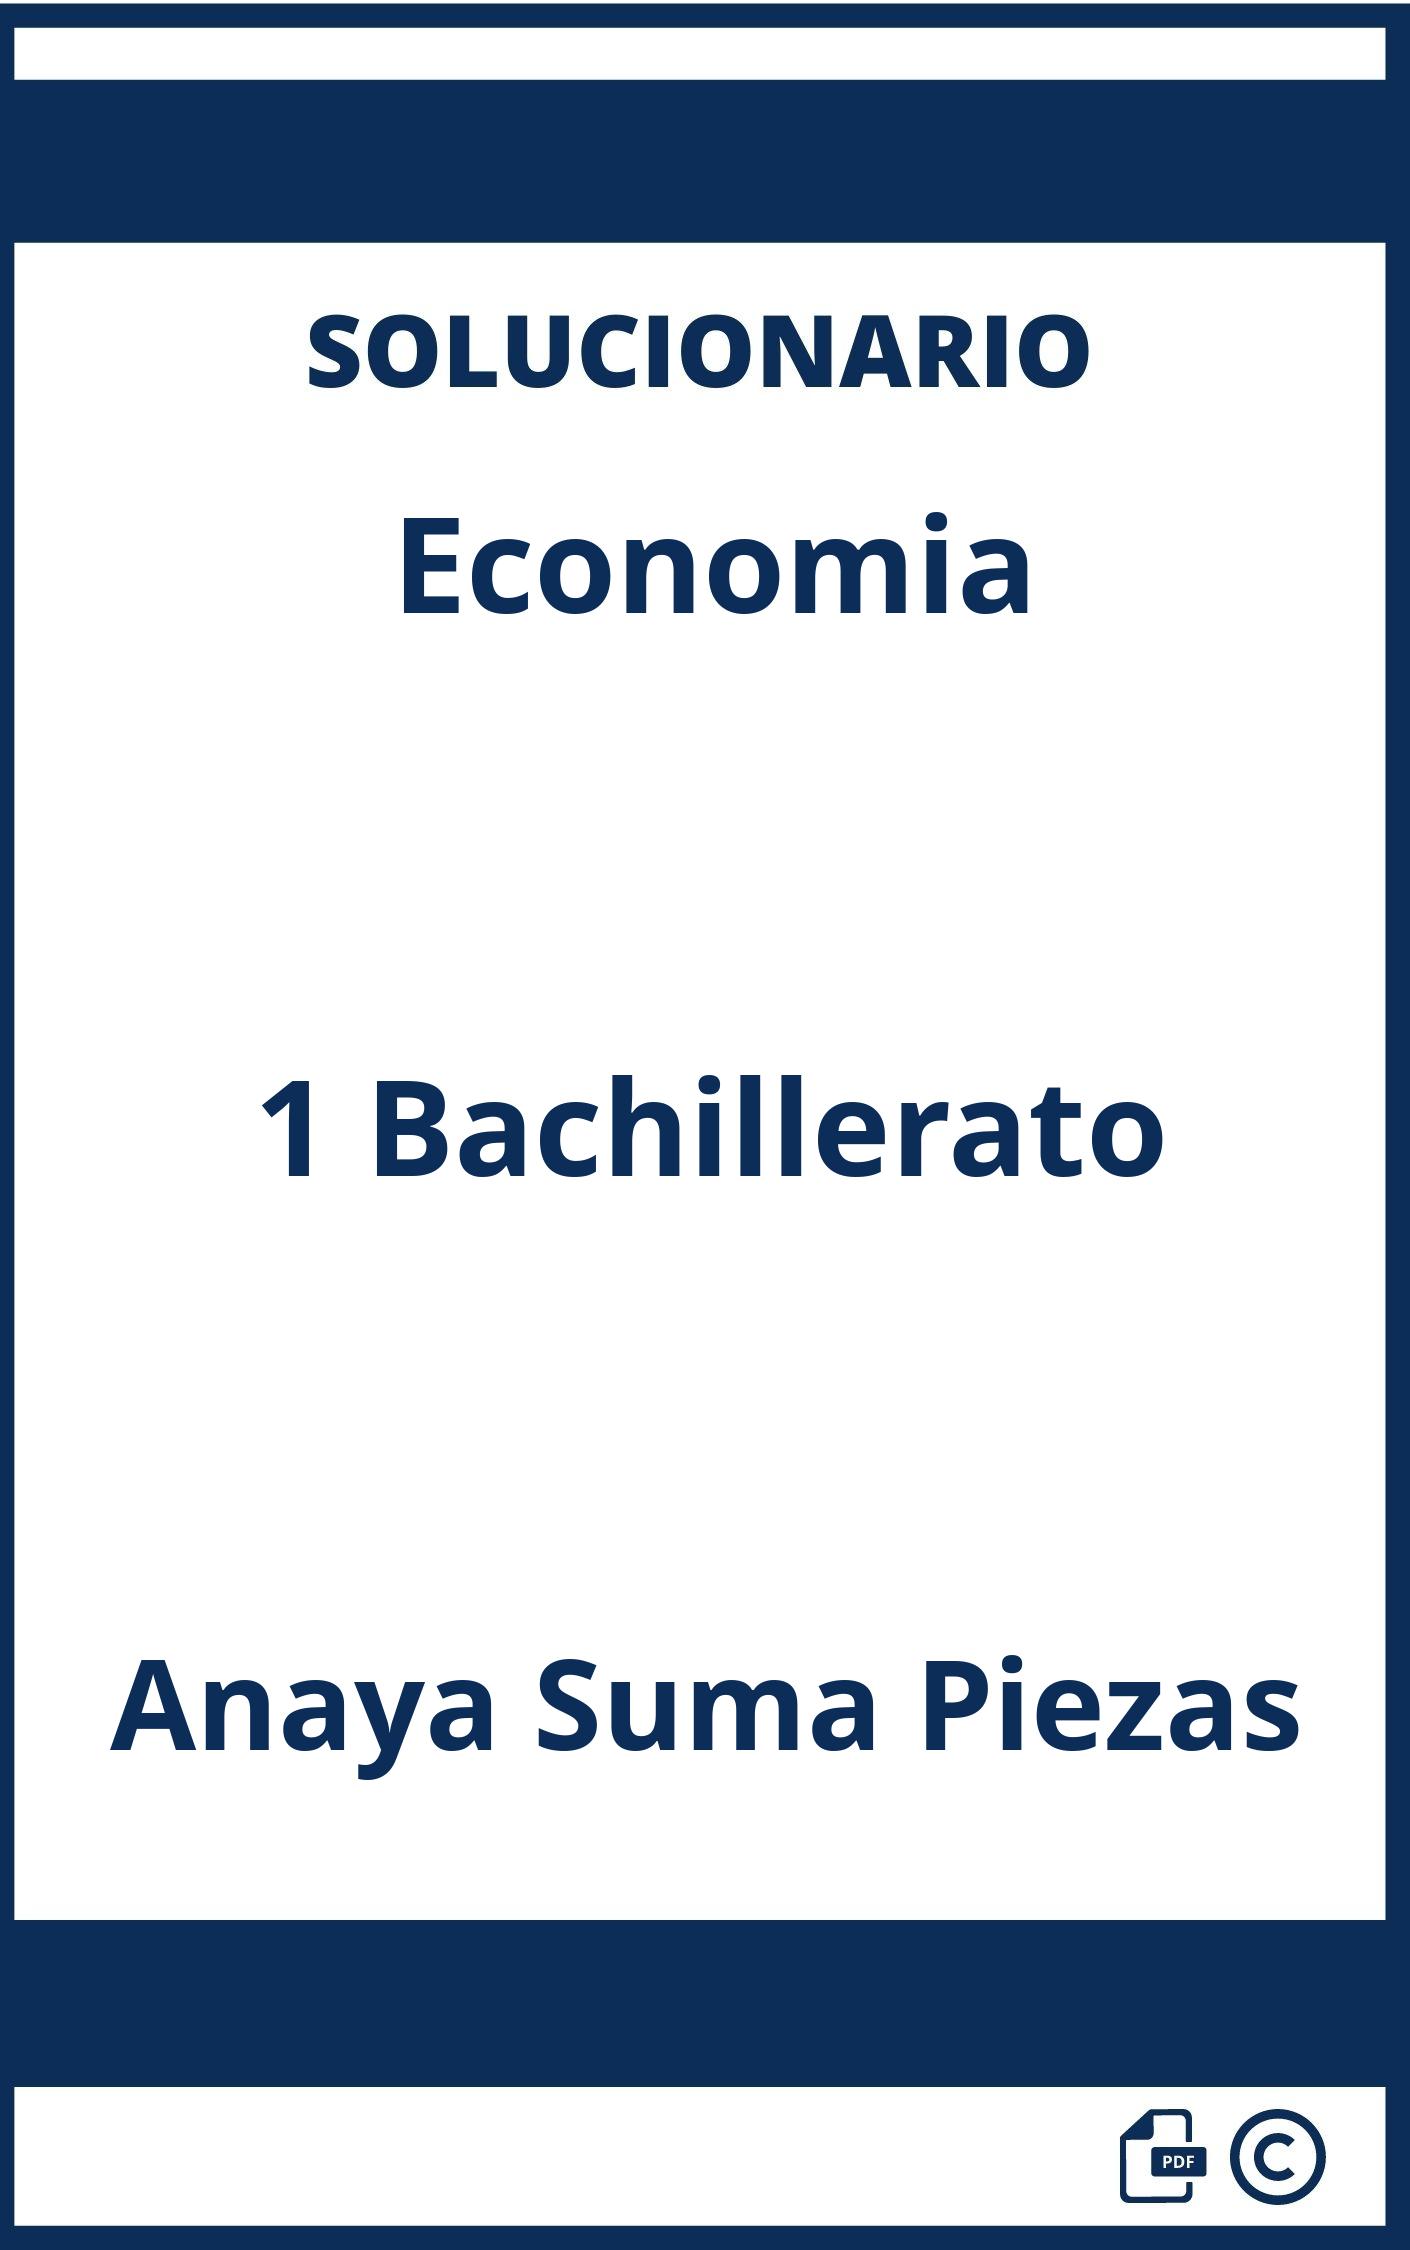 Solucionario Economia 1 Bachillerato Anaya Suma Piezas